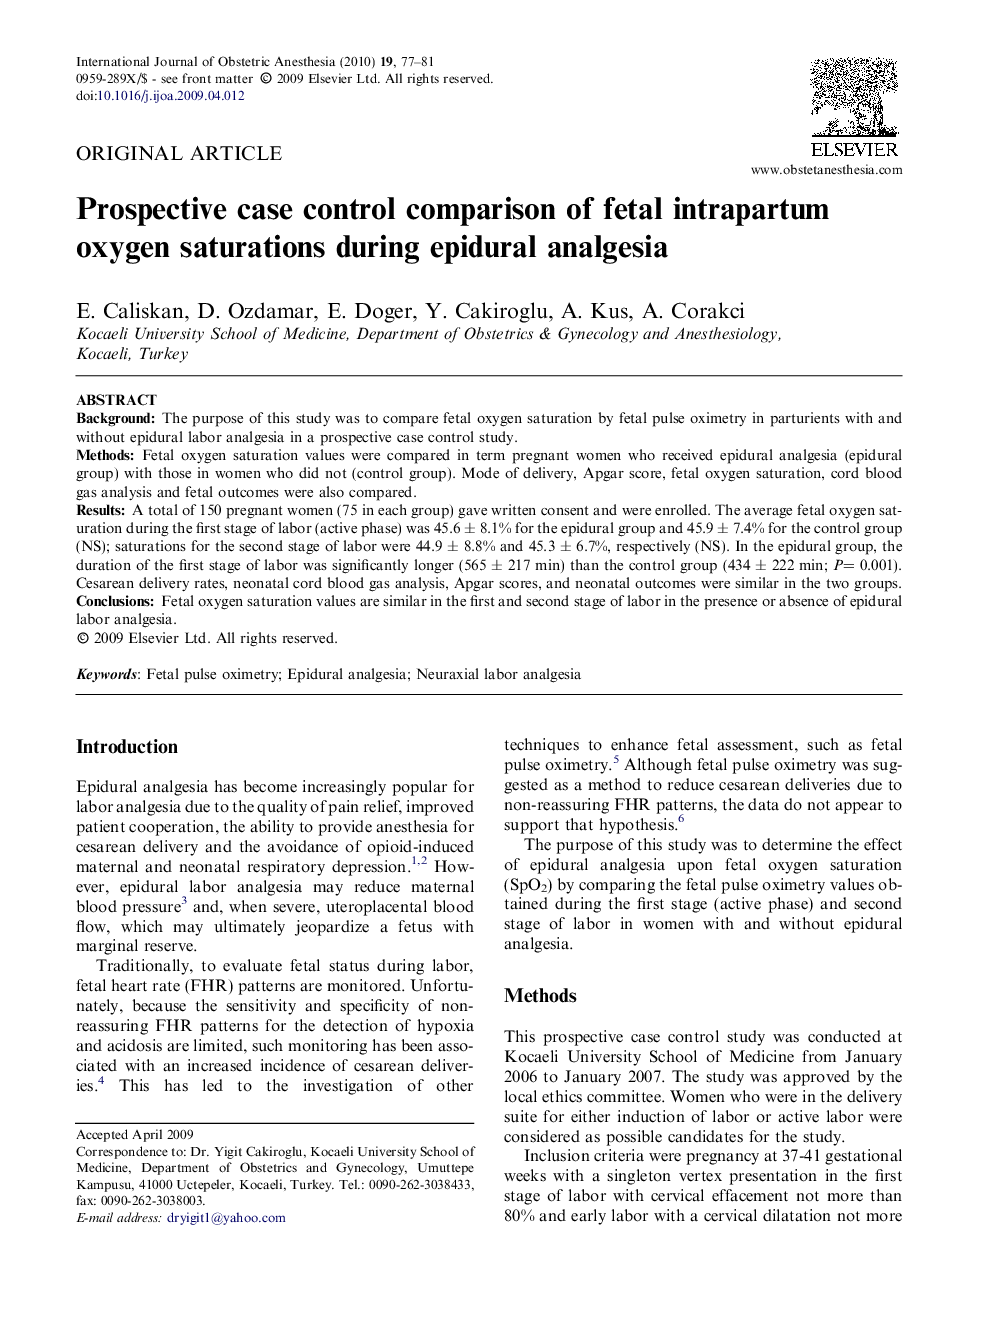 Prospective case control comparison of fetal intrapartum oxygen saturations during epidural analgesia